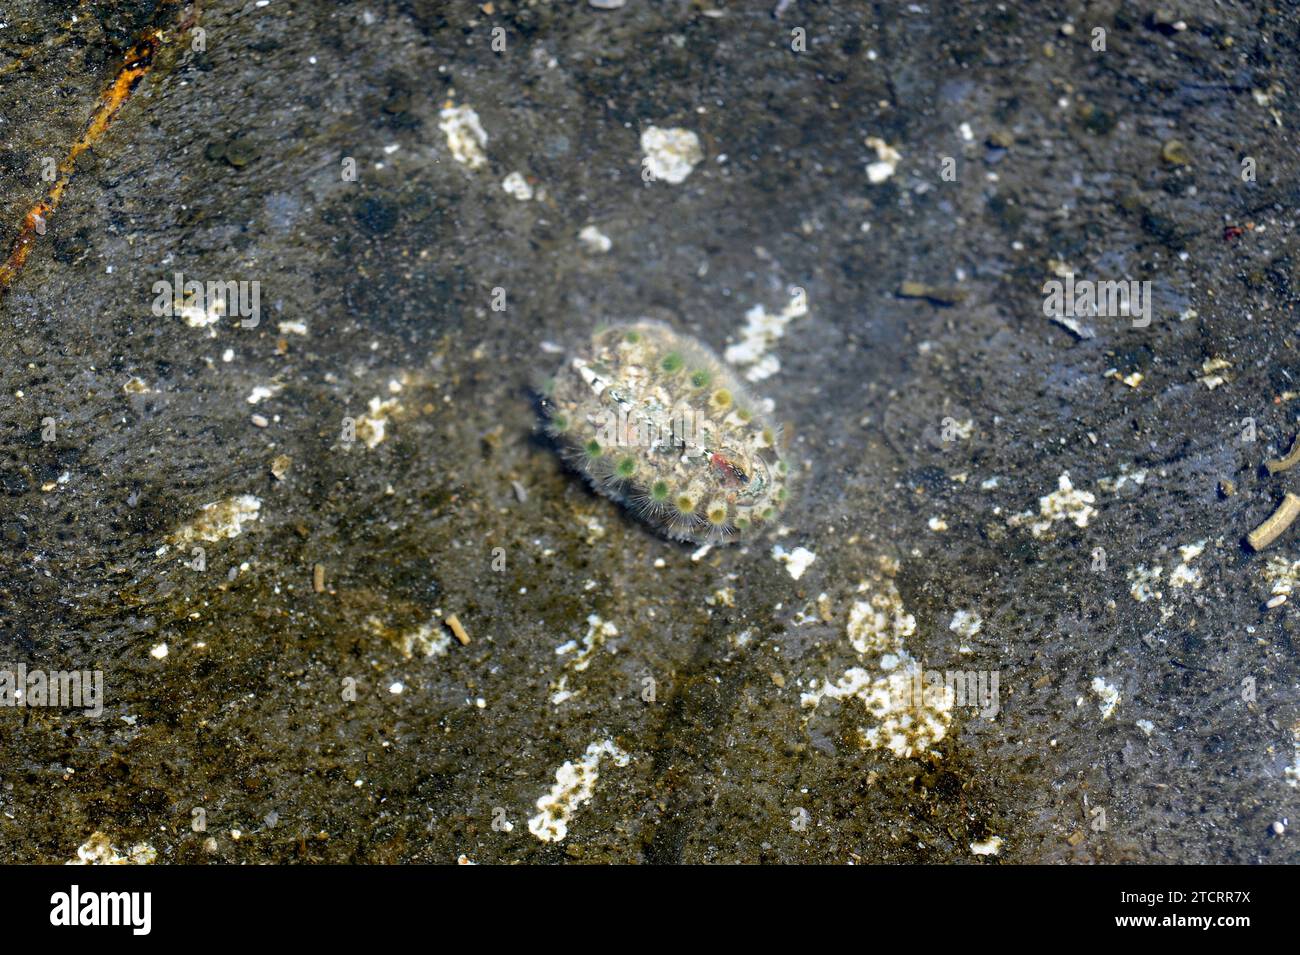 Chiton (Acanthochitona communis or Acanthochitona fascicularis) is a marine mollusca polyplacofora. Stock Photo